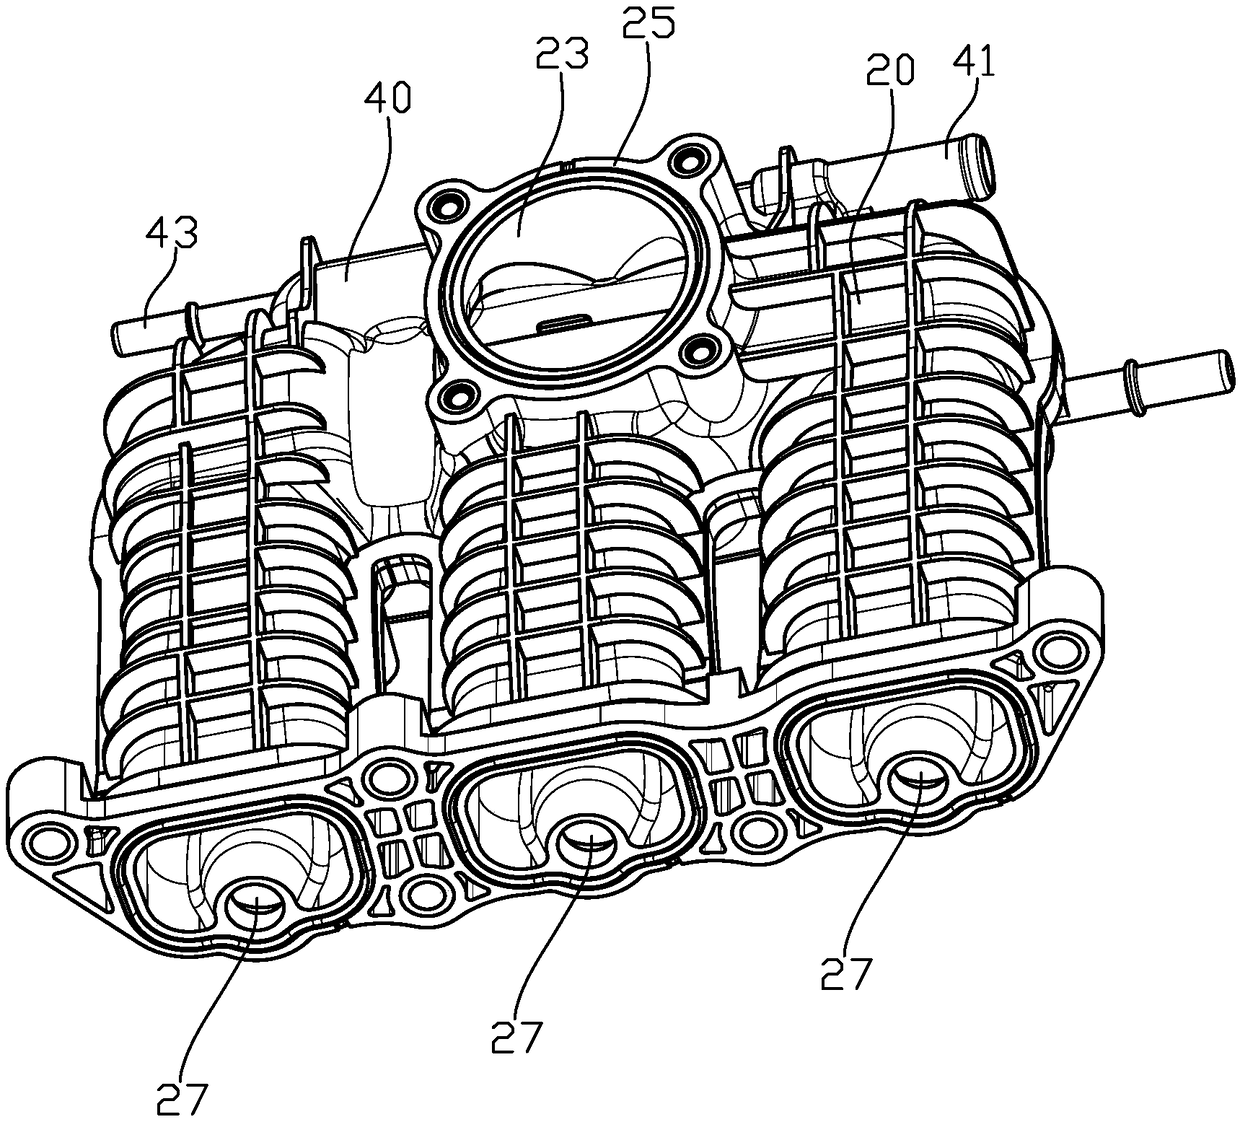 Engine intake manifold and engine